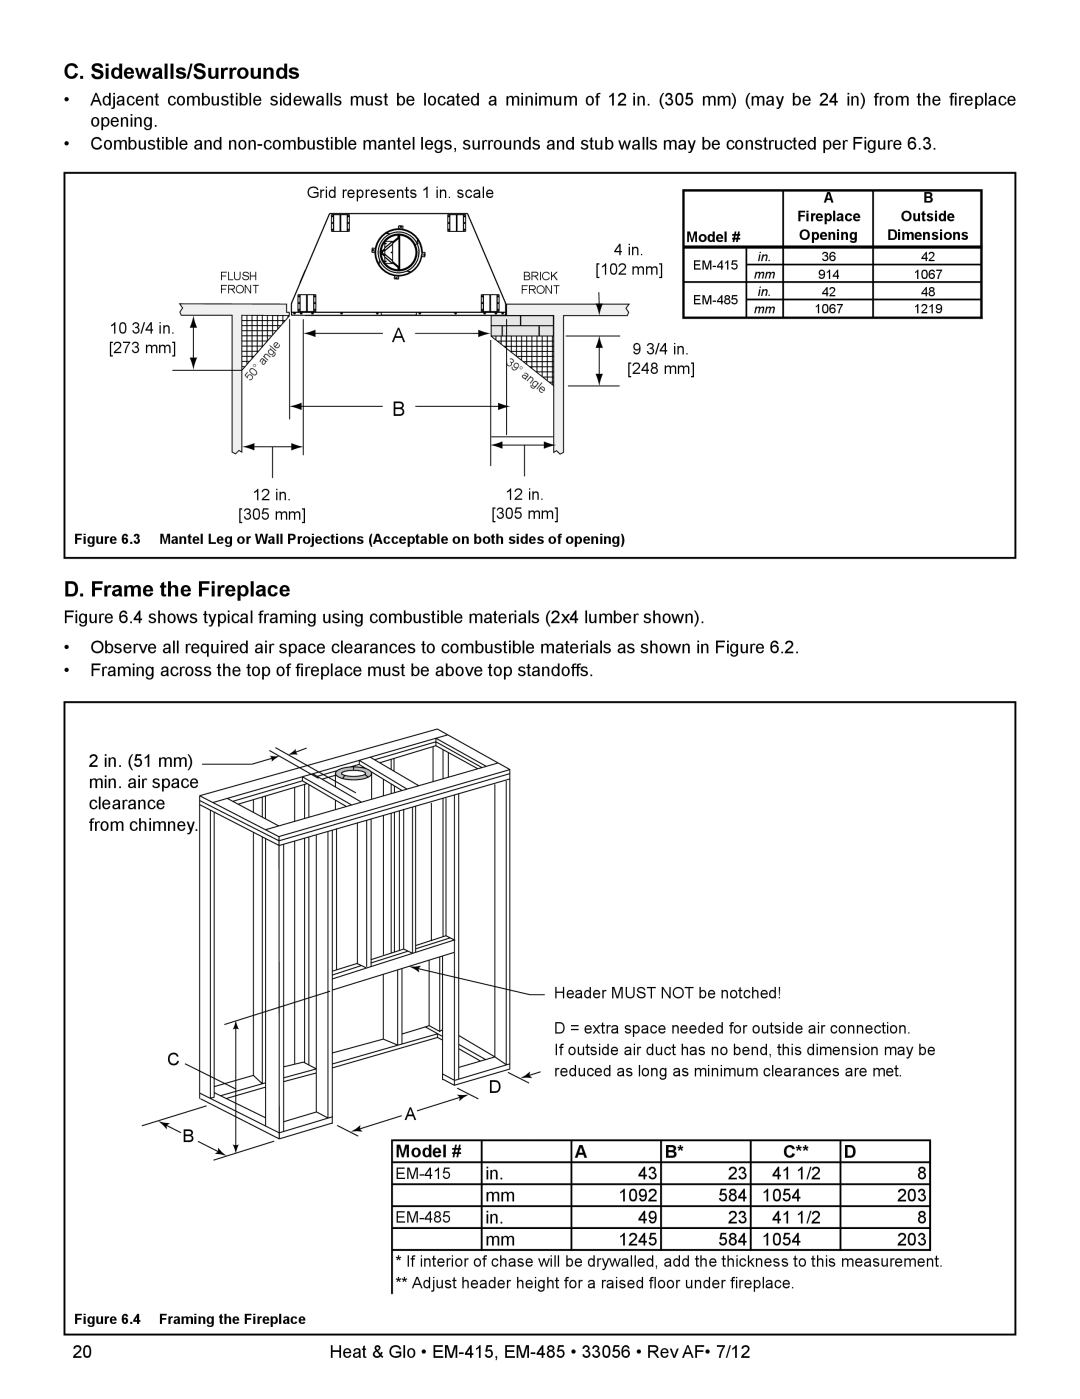 Heat & Glo LifeStyle EM-415 - 36 C. Sidewalls/Surrounds, D. Frame the Fireplace, Model #, 41 1/2, 1092, 1054, 1245 